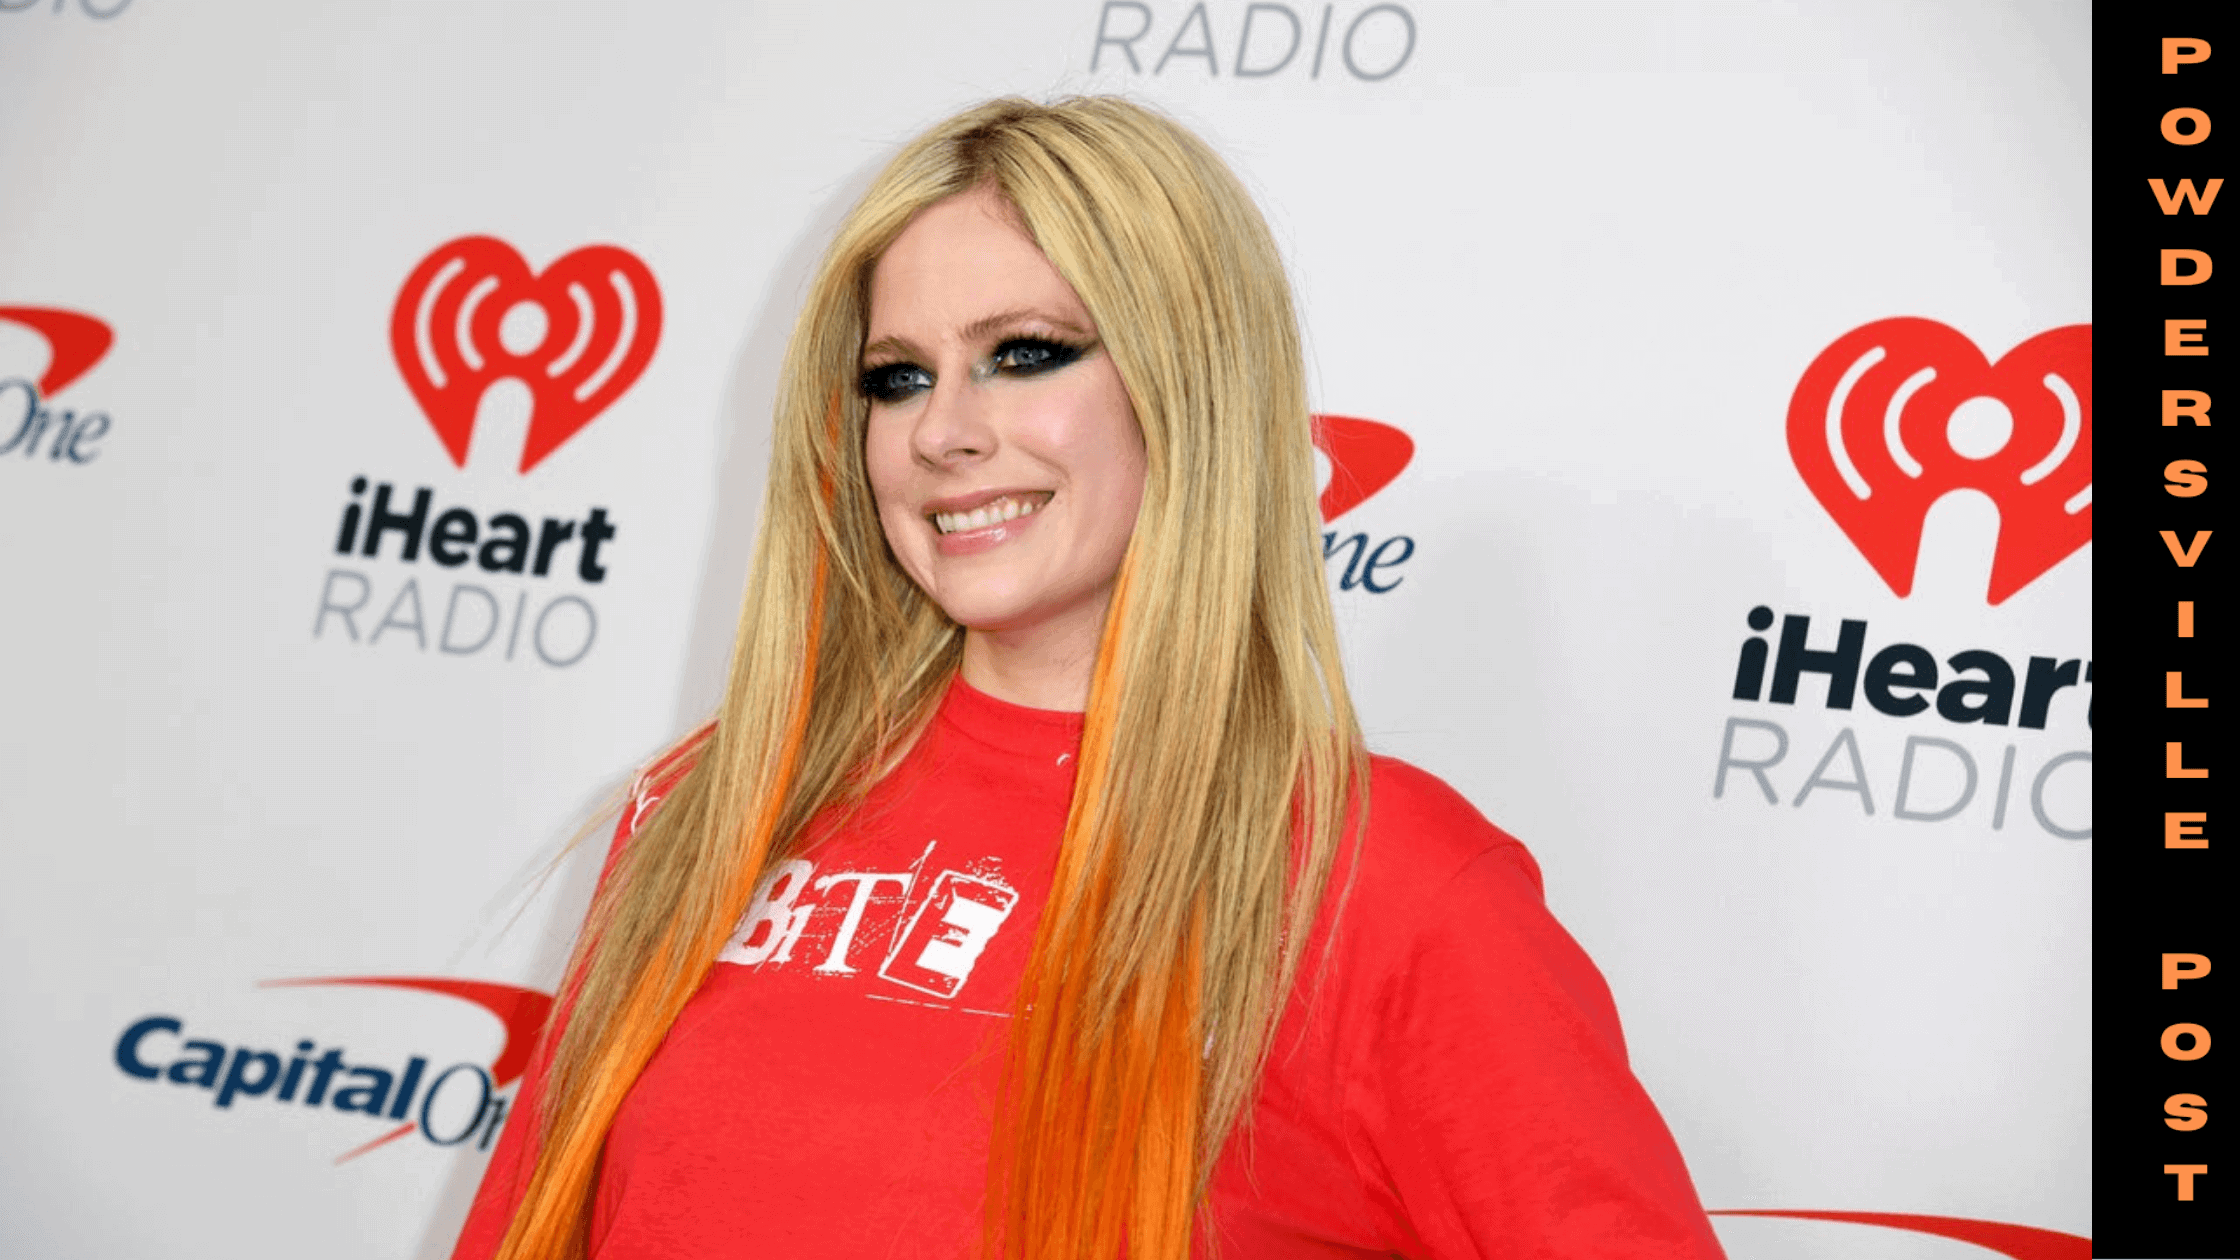 Avril Lavigne هنوز به هیچ کس اجازه آرایش او را نمی دهد!!  او توضیح می دهد: 